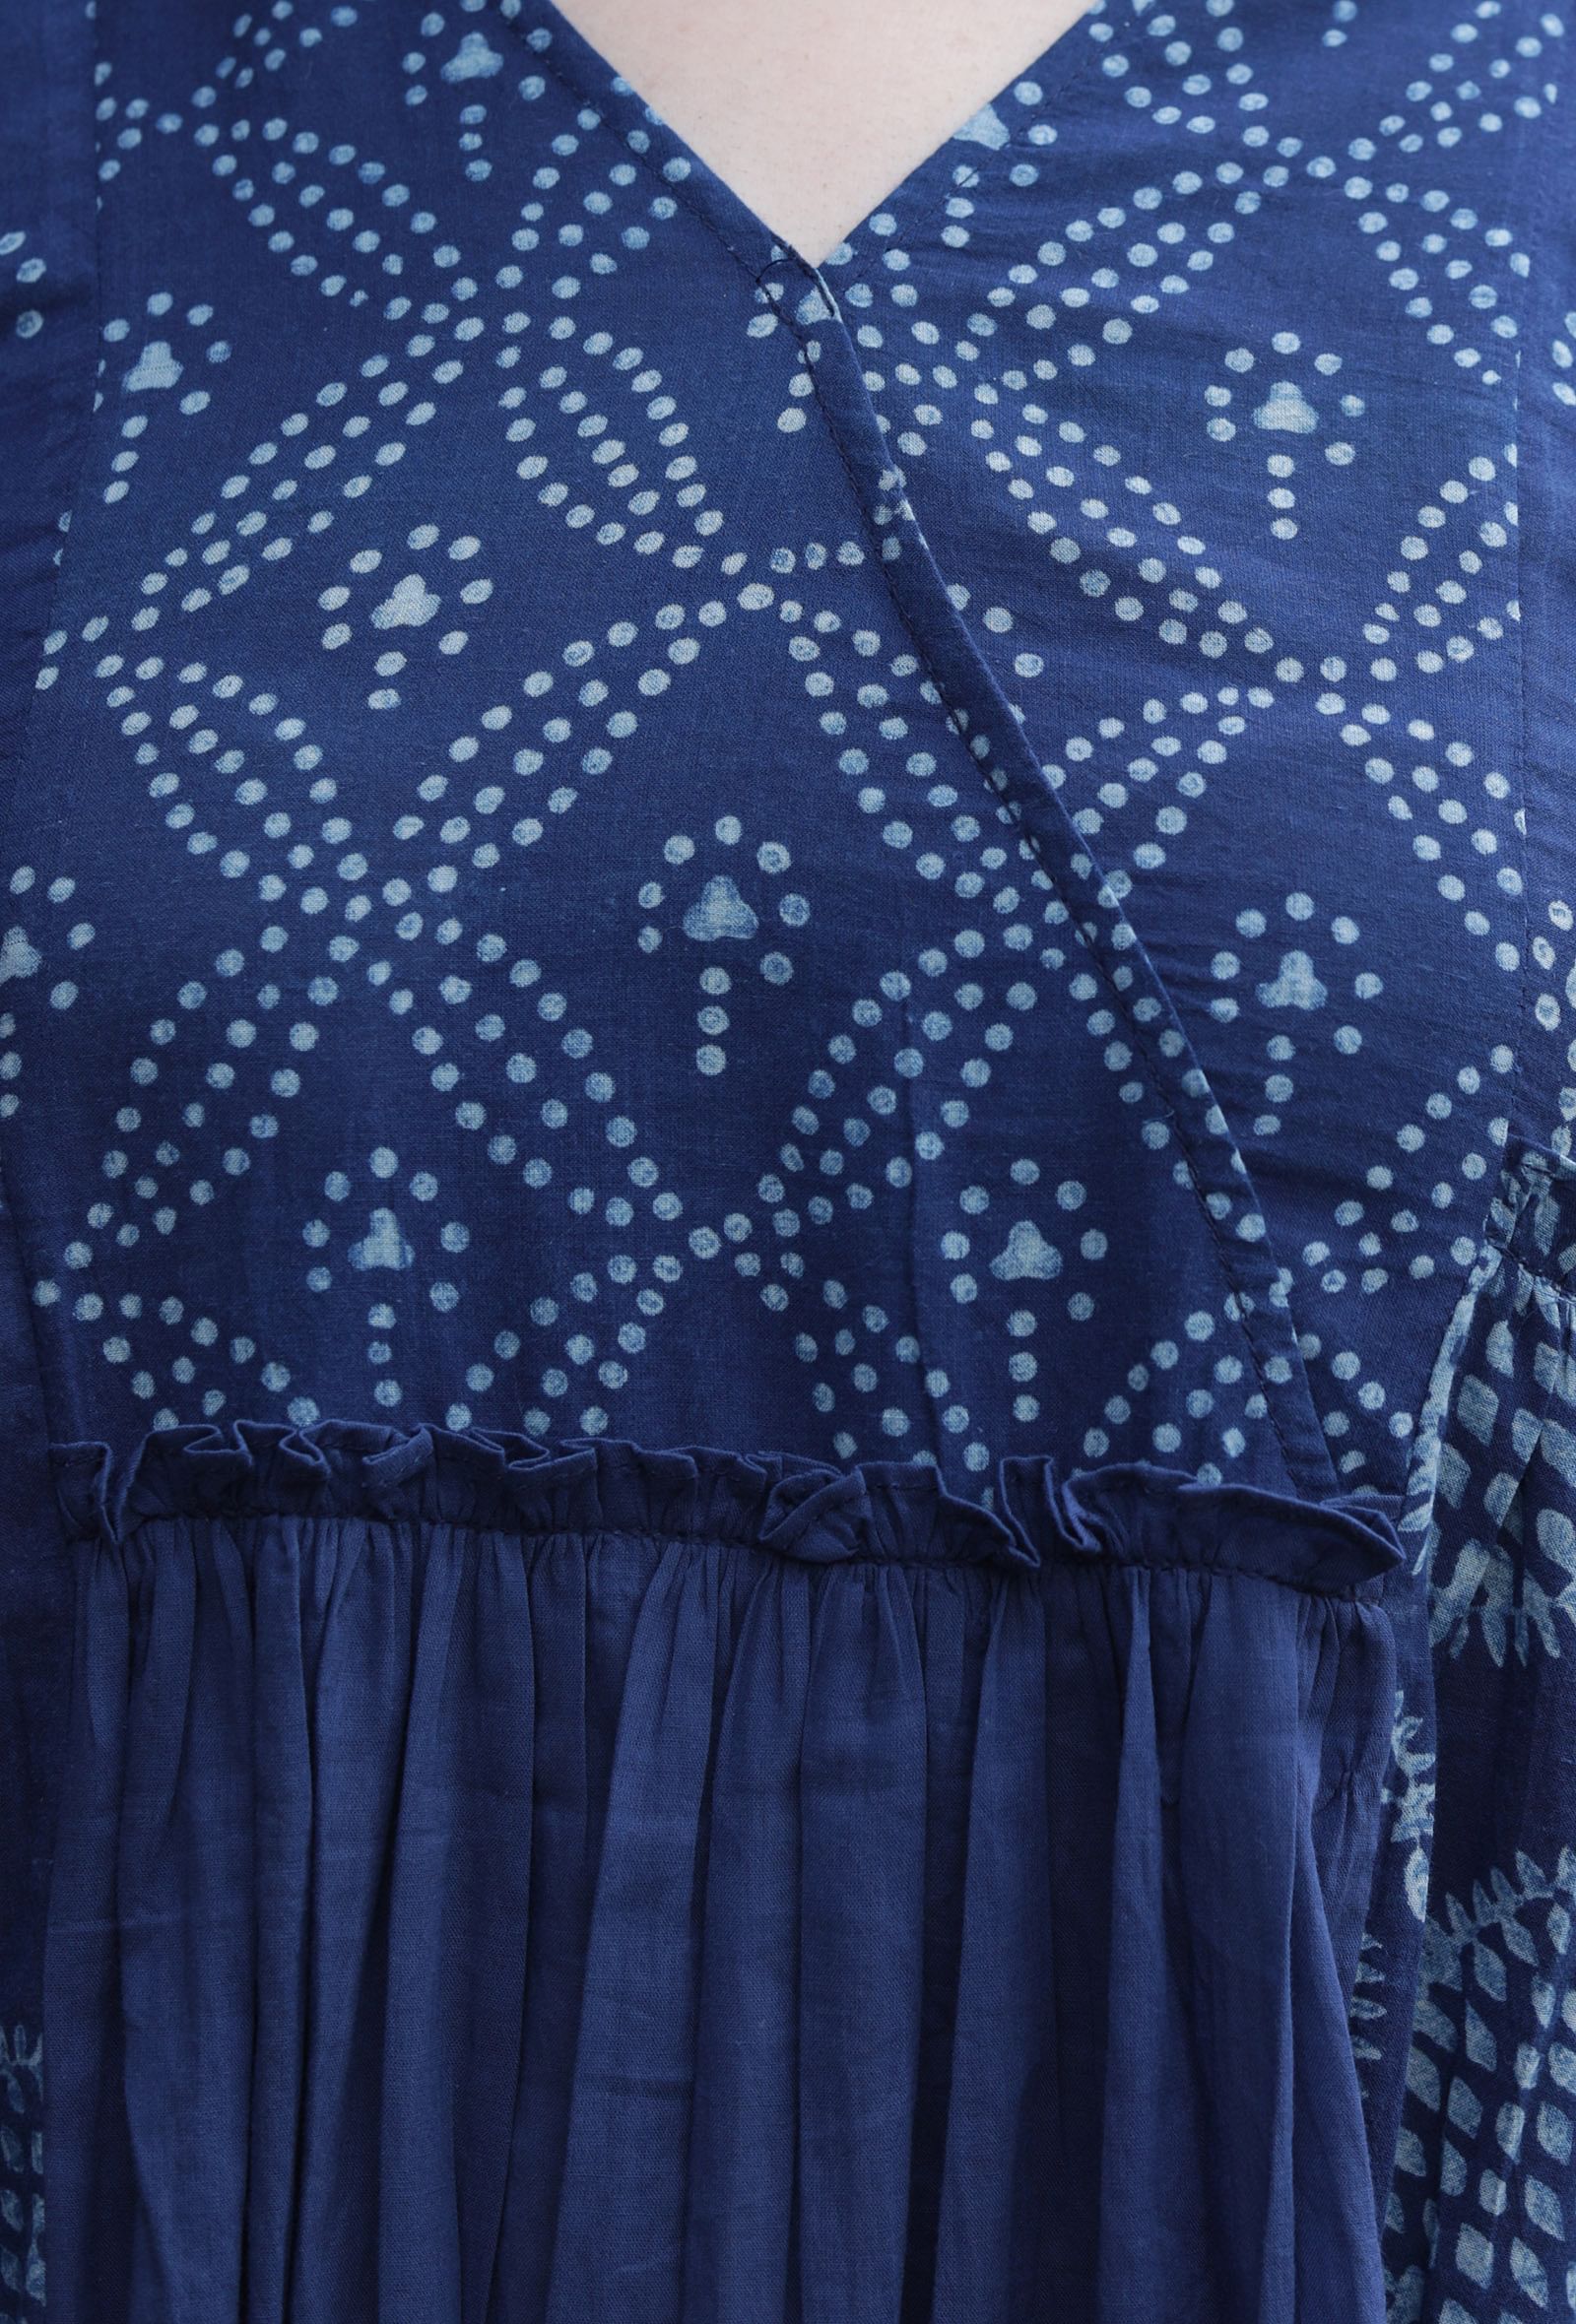 Konalaka Indigo Cotton Hand Block Printed Tiered Kurta Dress – TJORI